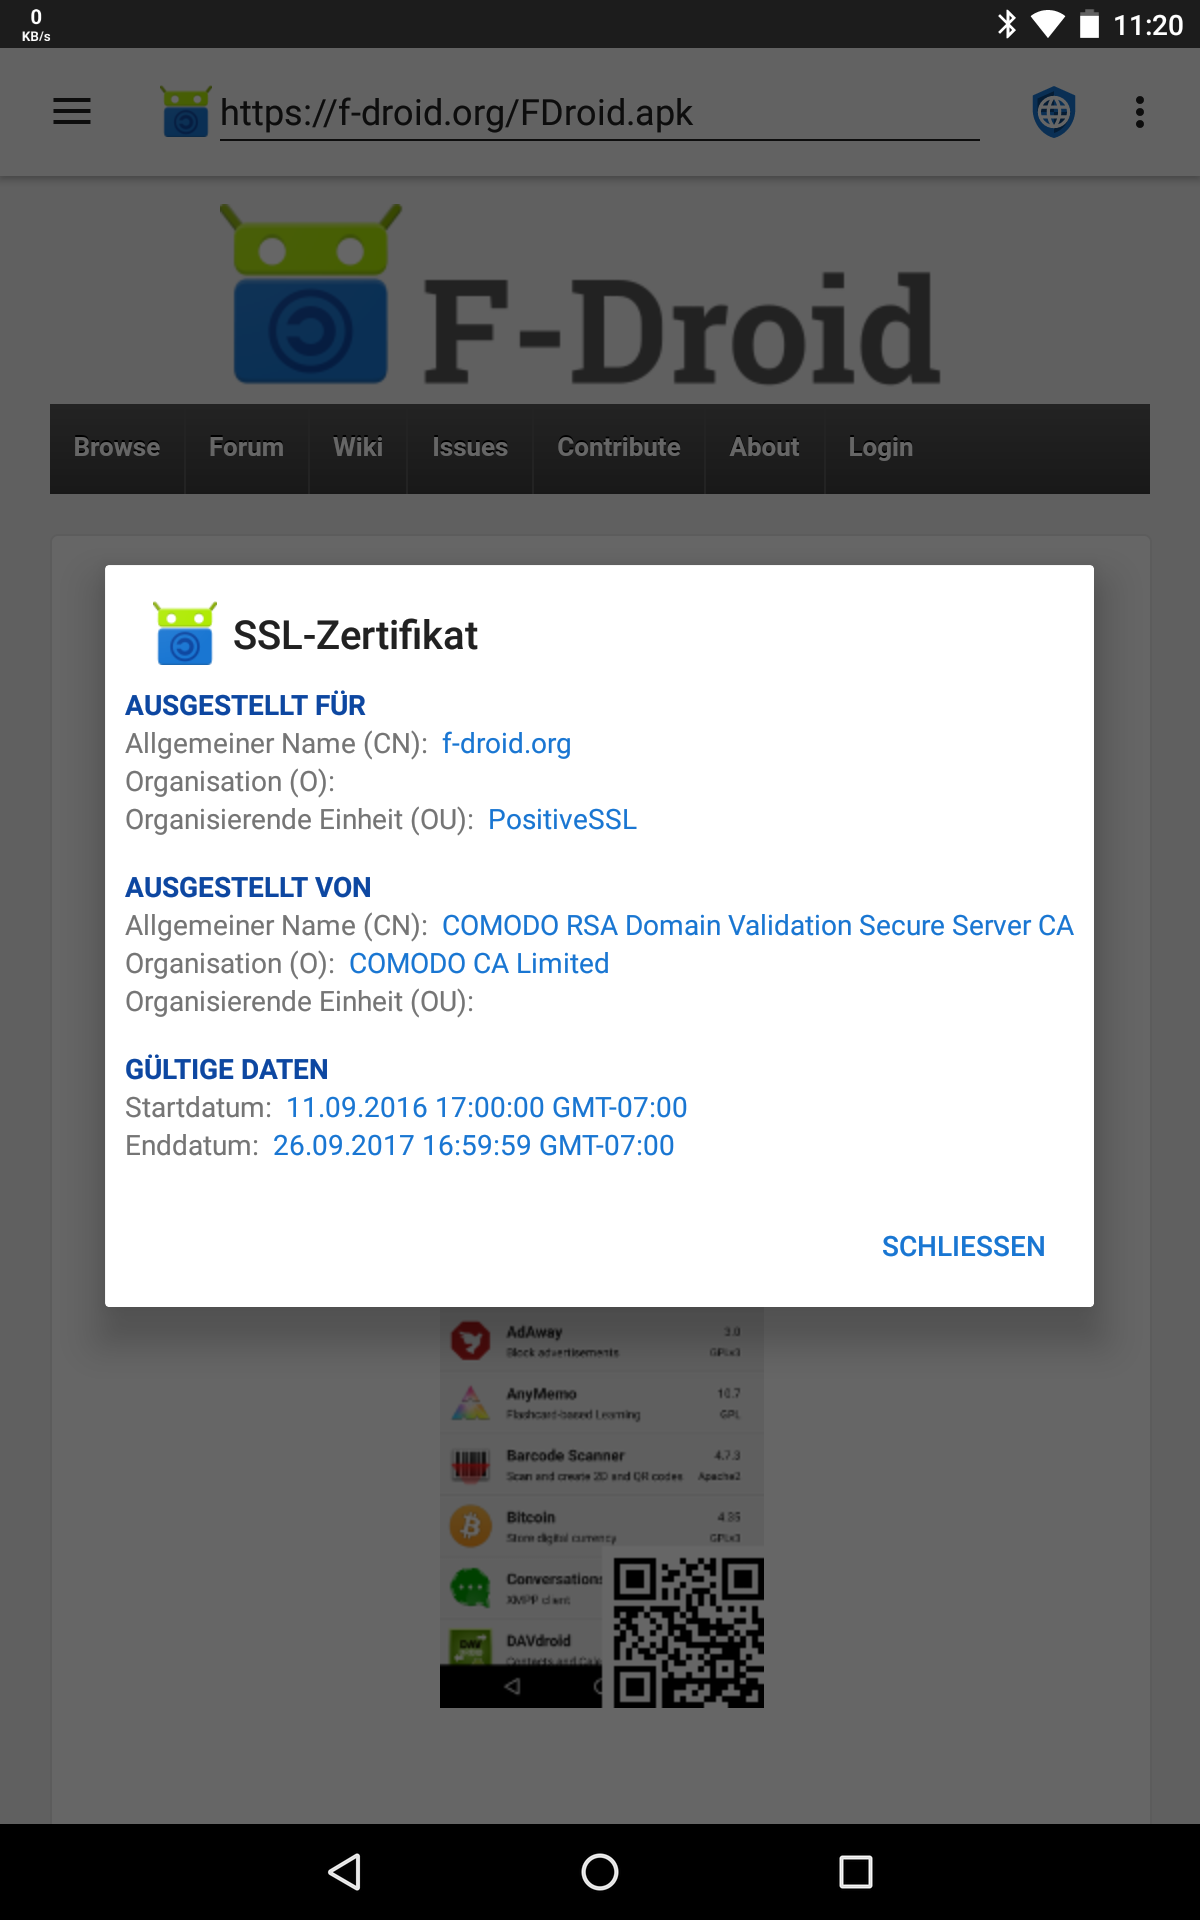 fastlane/metadata/android/de/sevenInchScreenshots/01 - View SSL Certificate - de.png